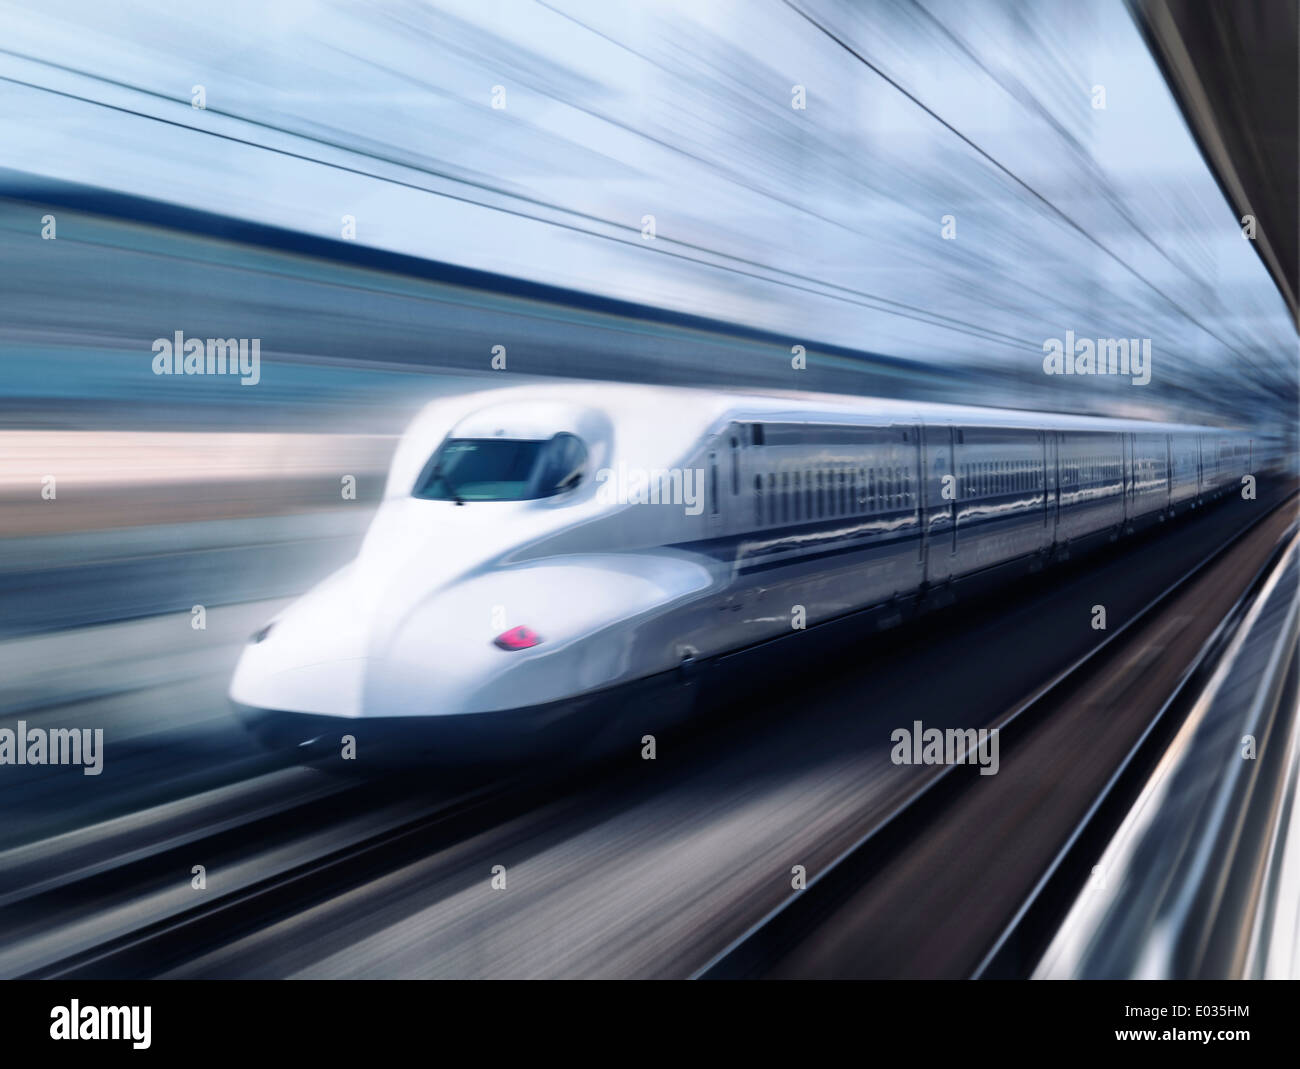 Shinkansen high-speed bullet train N700 series Nozomi passing a platform blurred from motion. Shizuoka, Japan Stock Photo